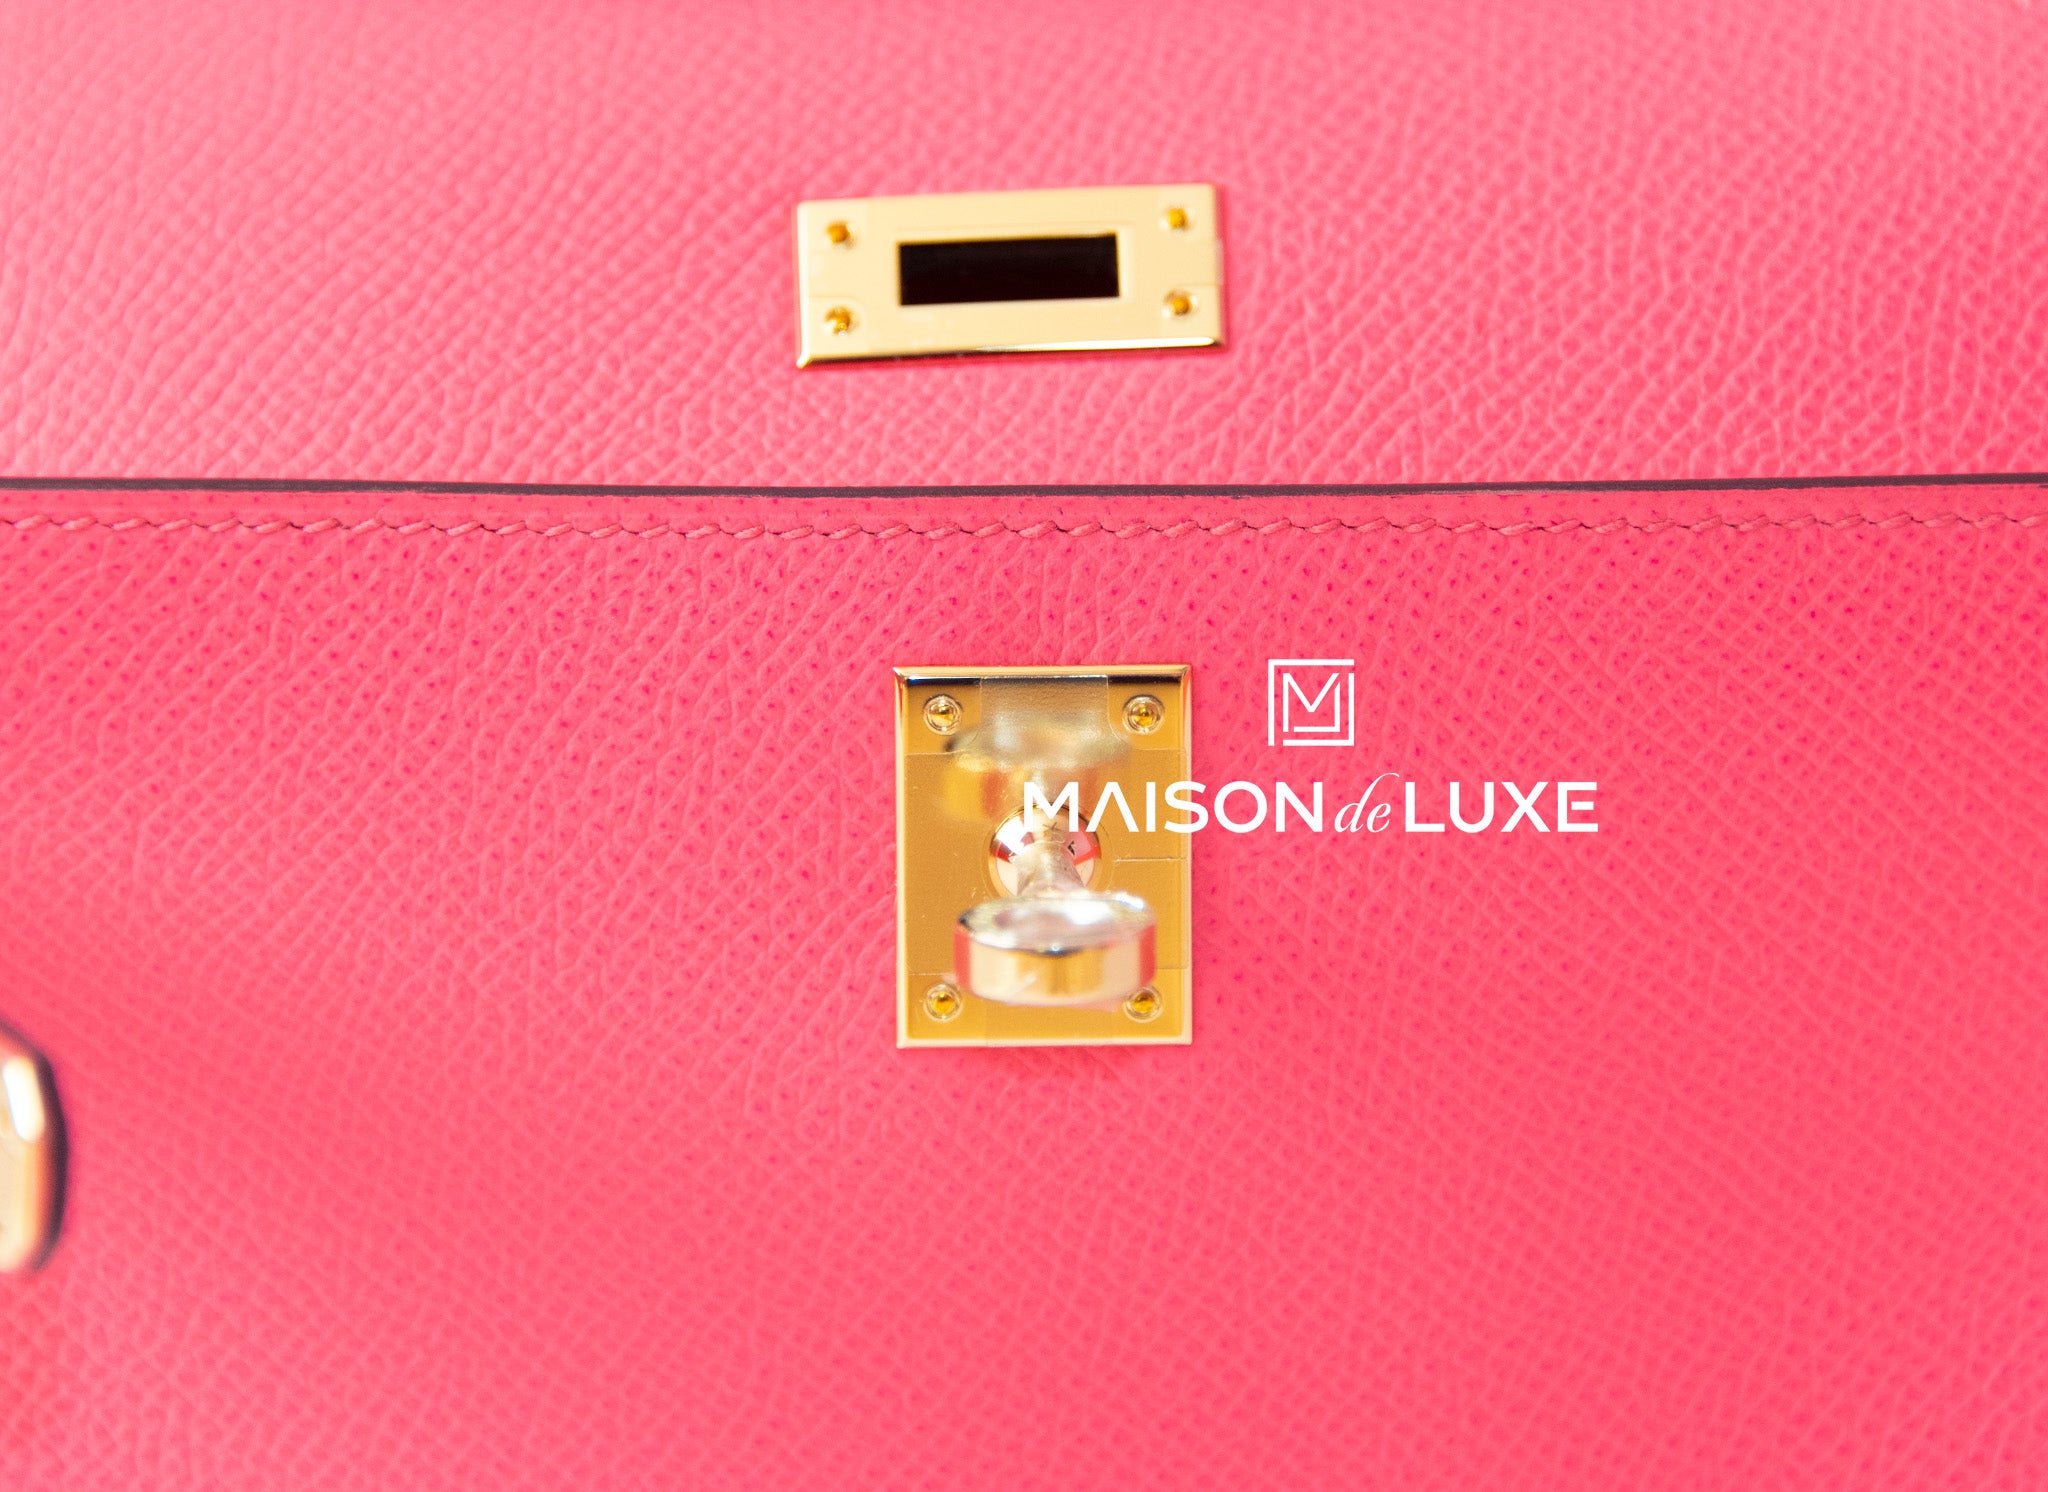 Hermès MiniKelly Pochette Rose Azalee 8W Epsom Leather Gold